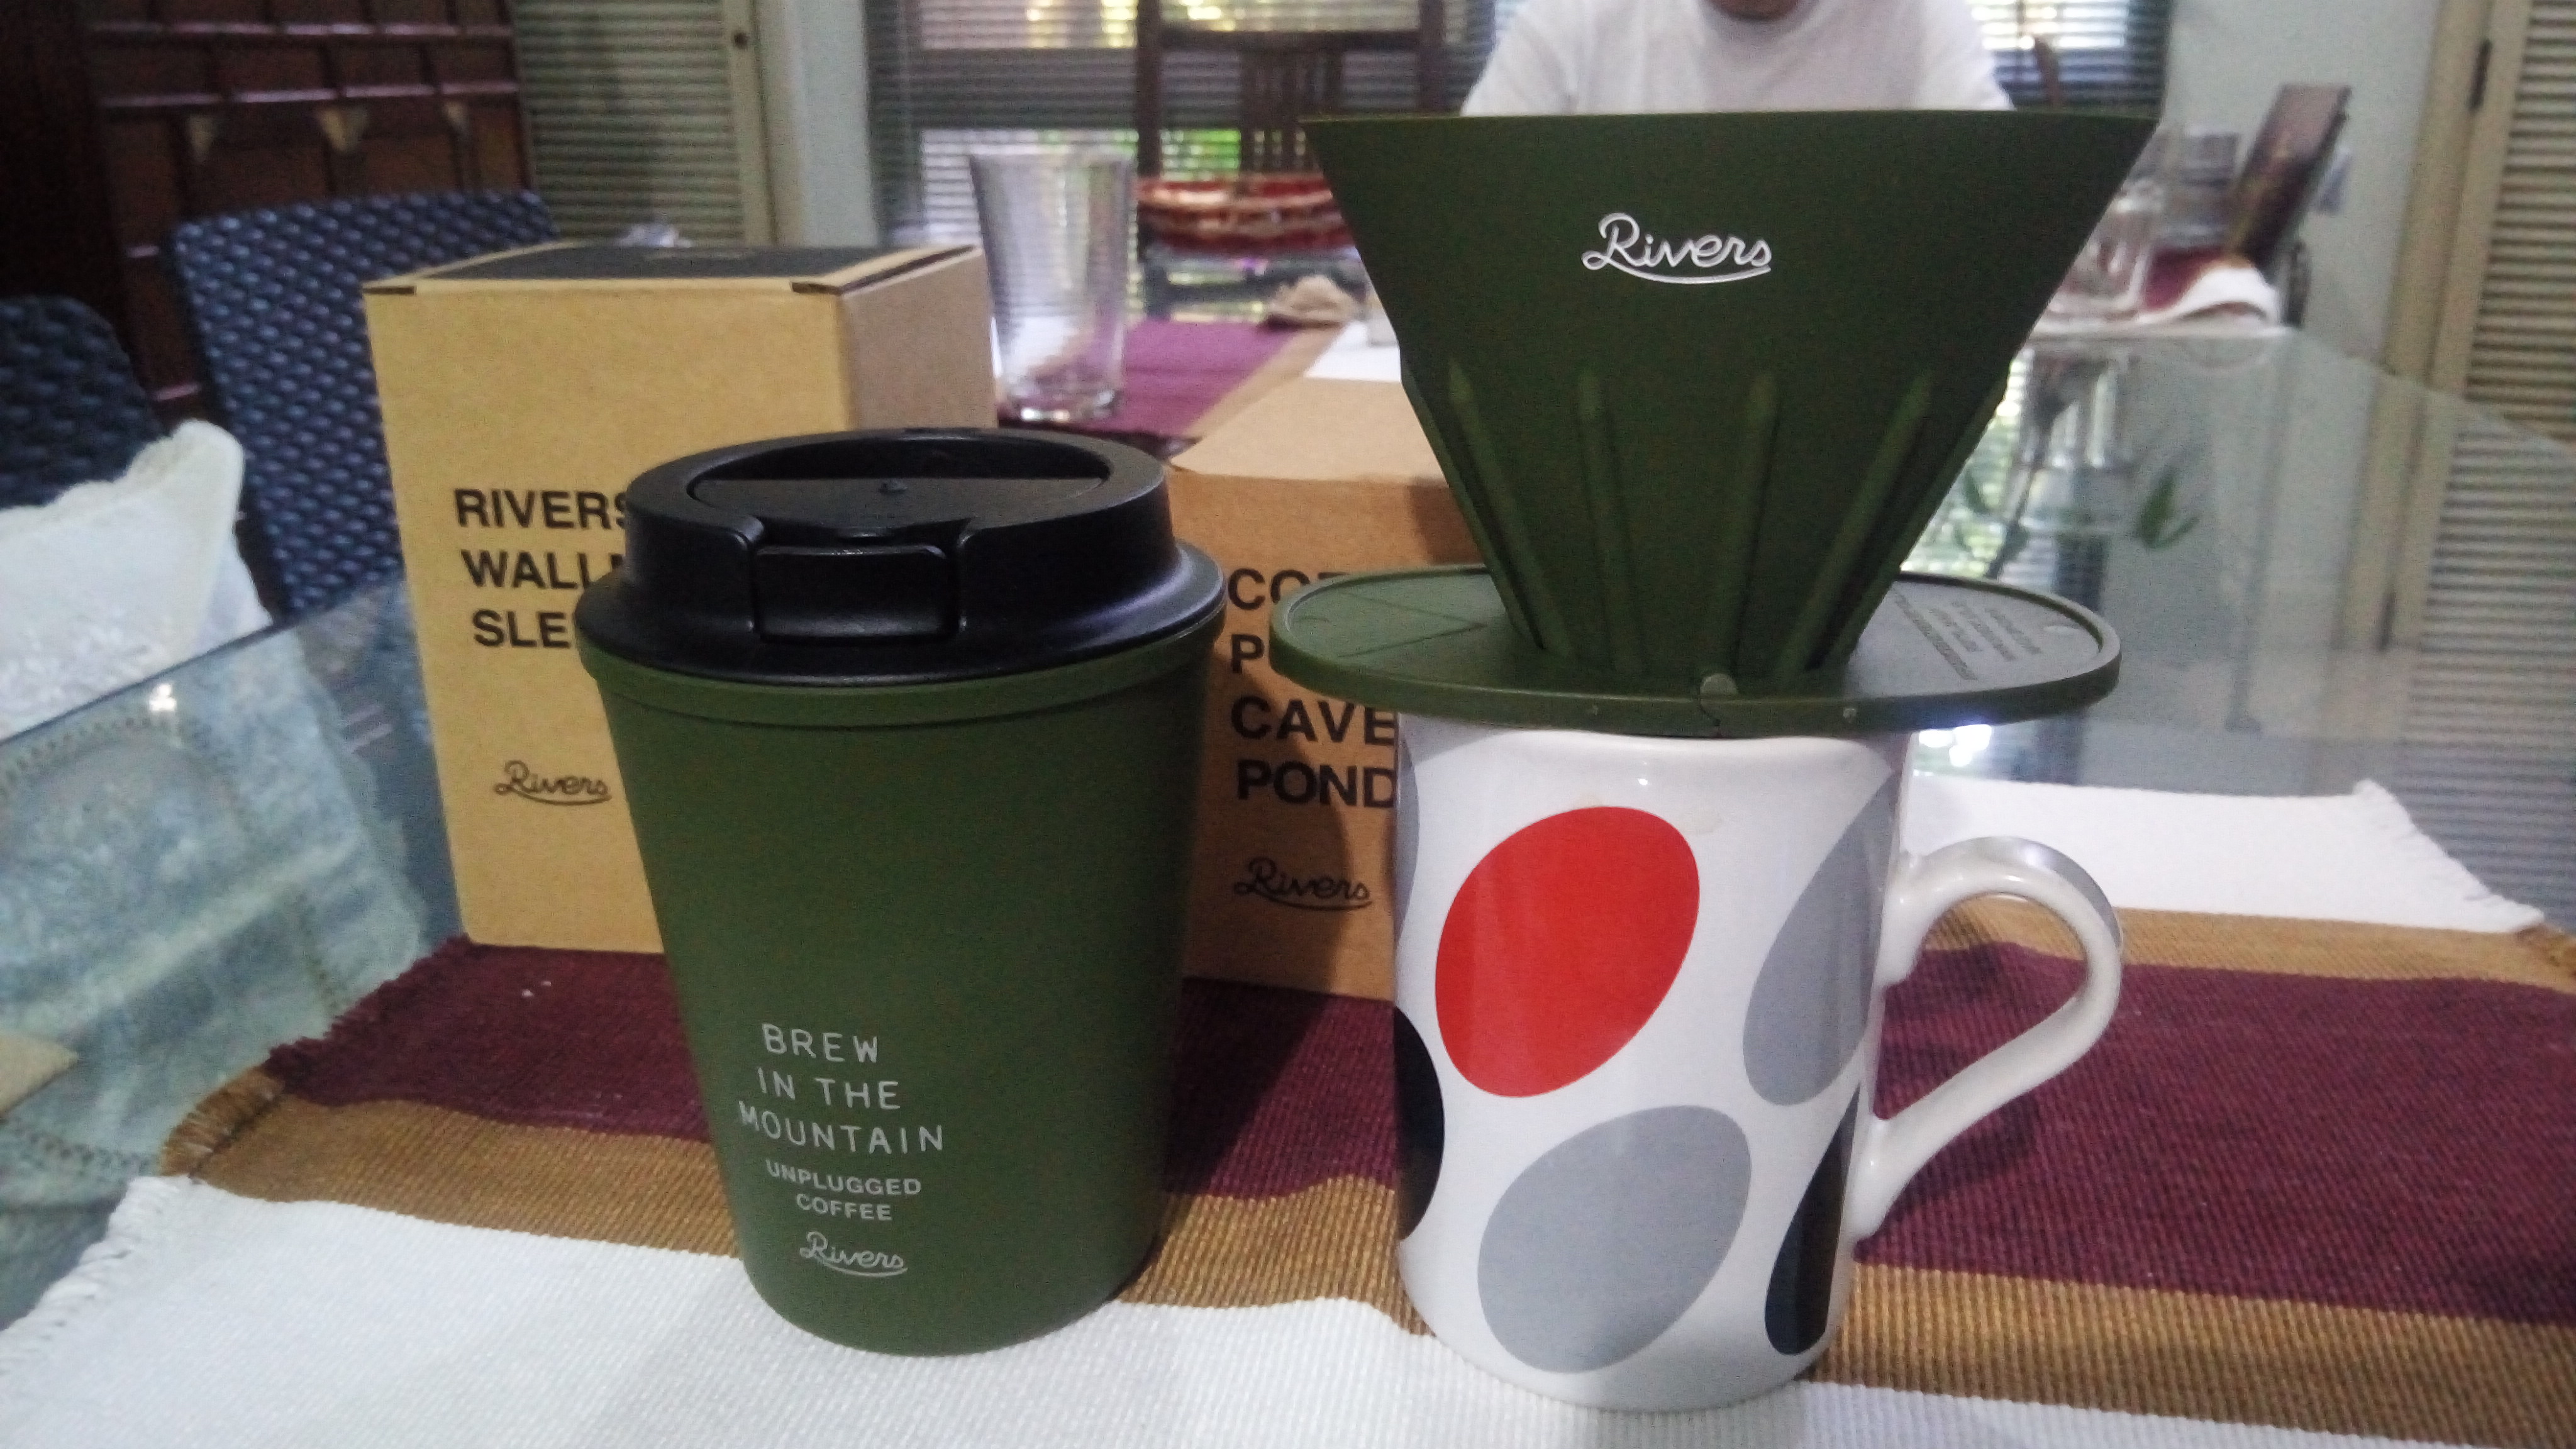 Rivers coffee mug and dripper